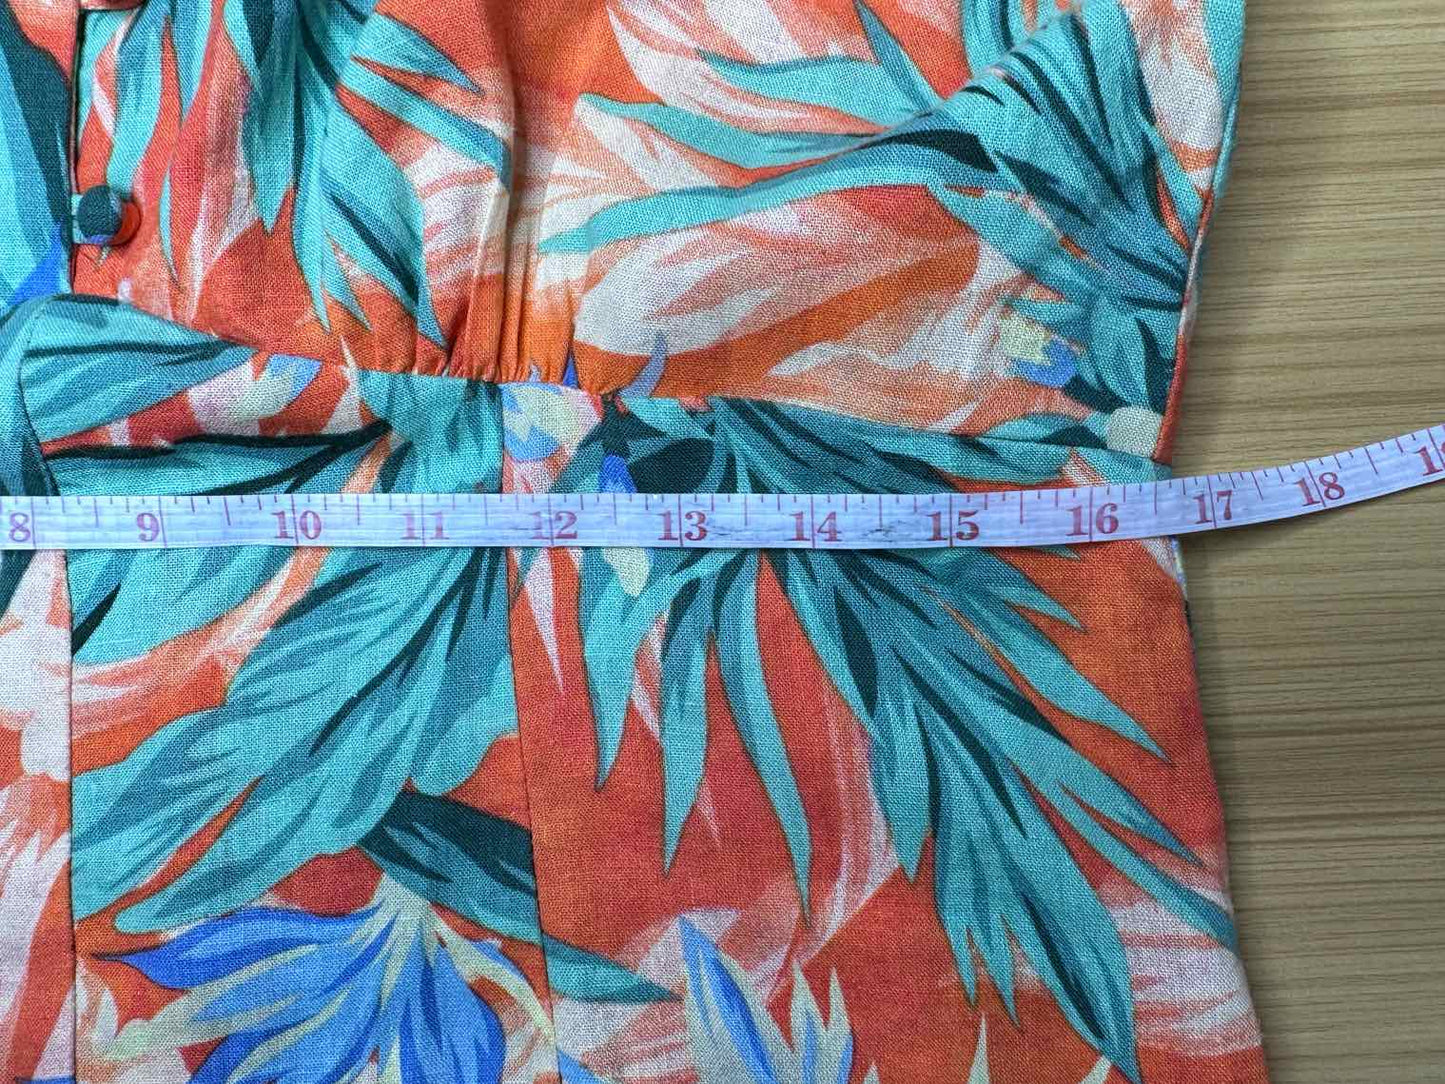 OLIVER BONAS Floral Tropical Print Maxi Dress Size 8